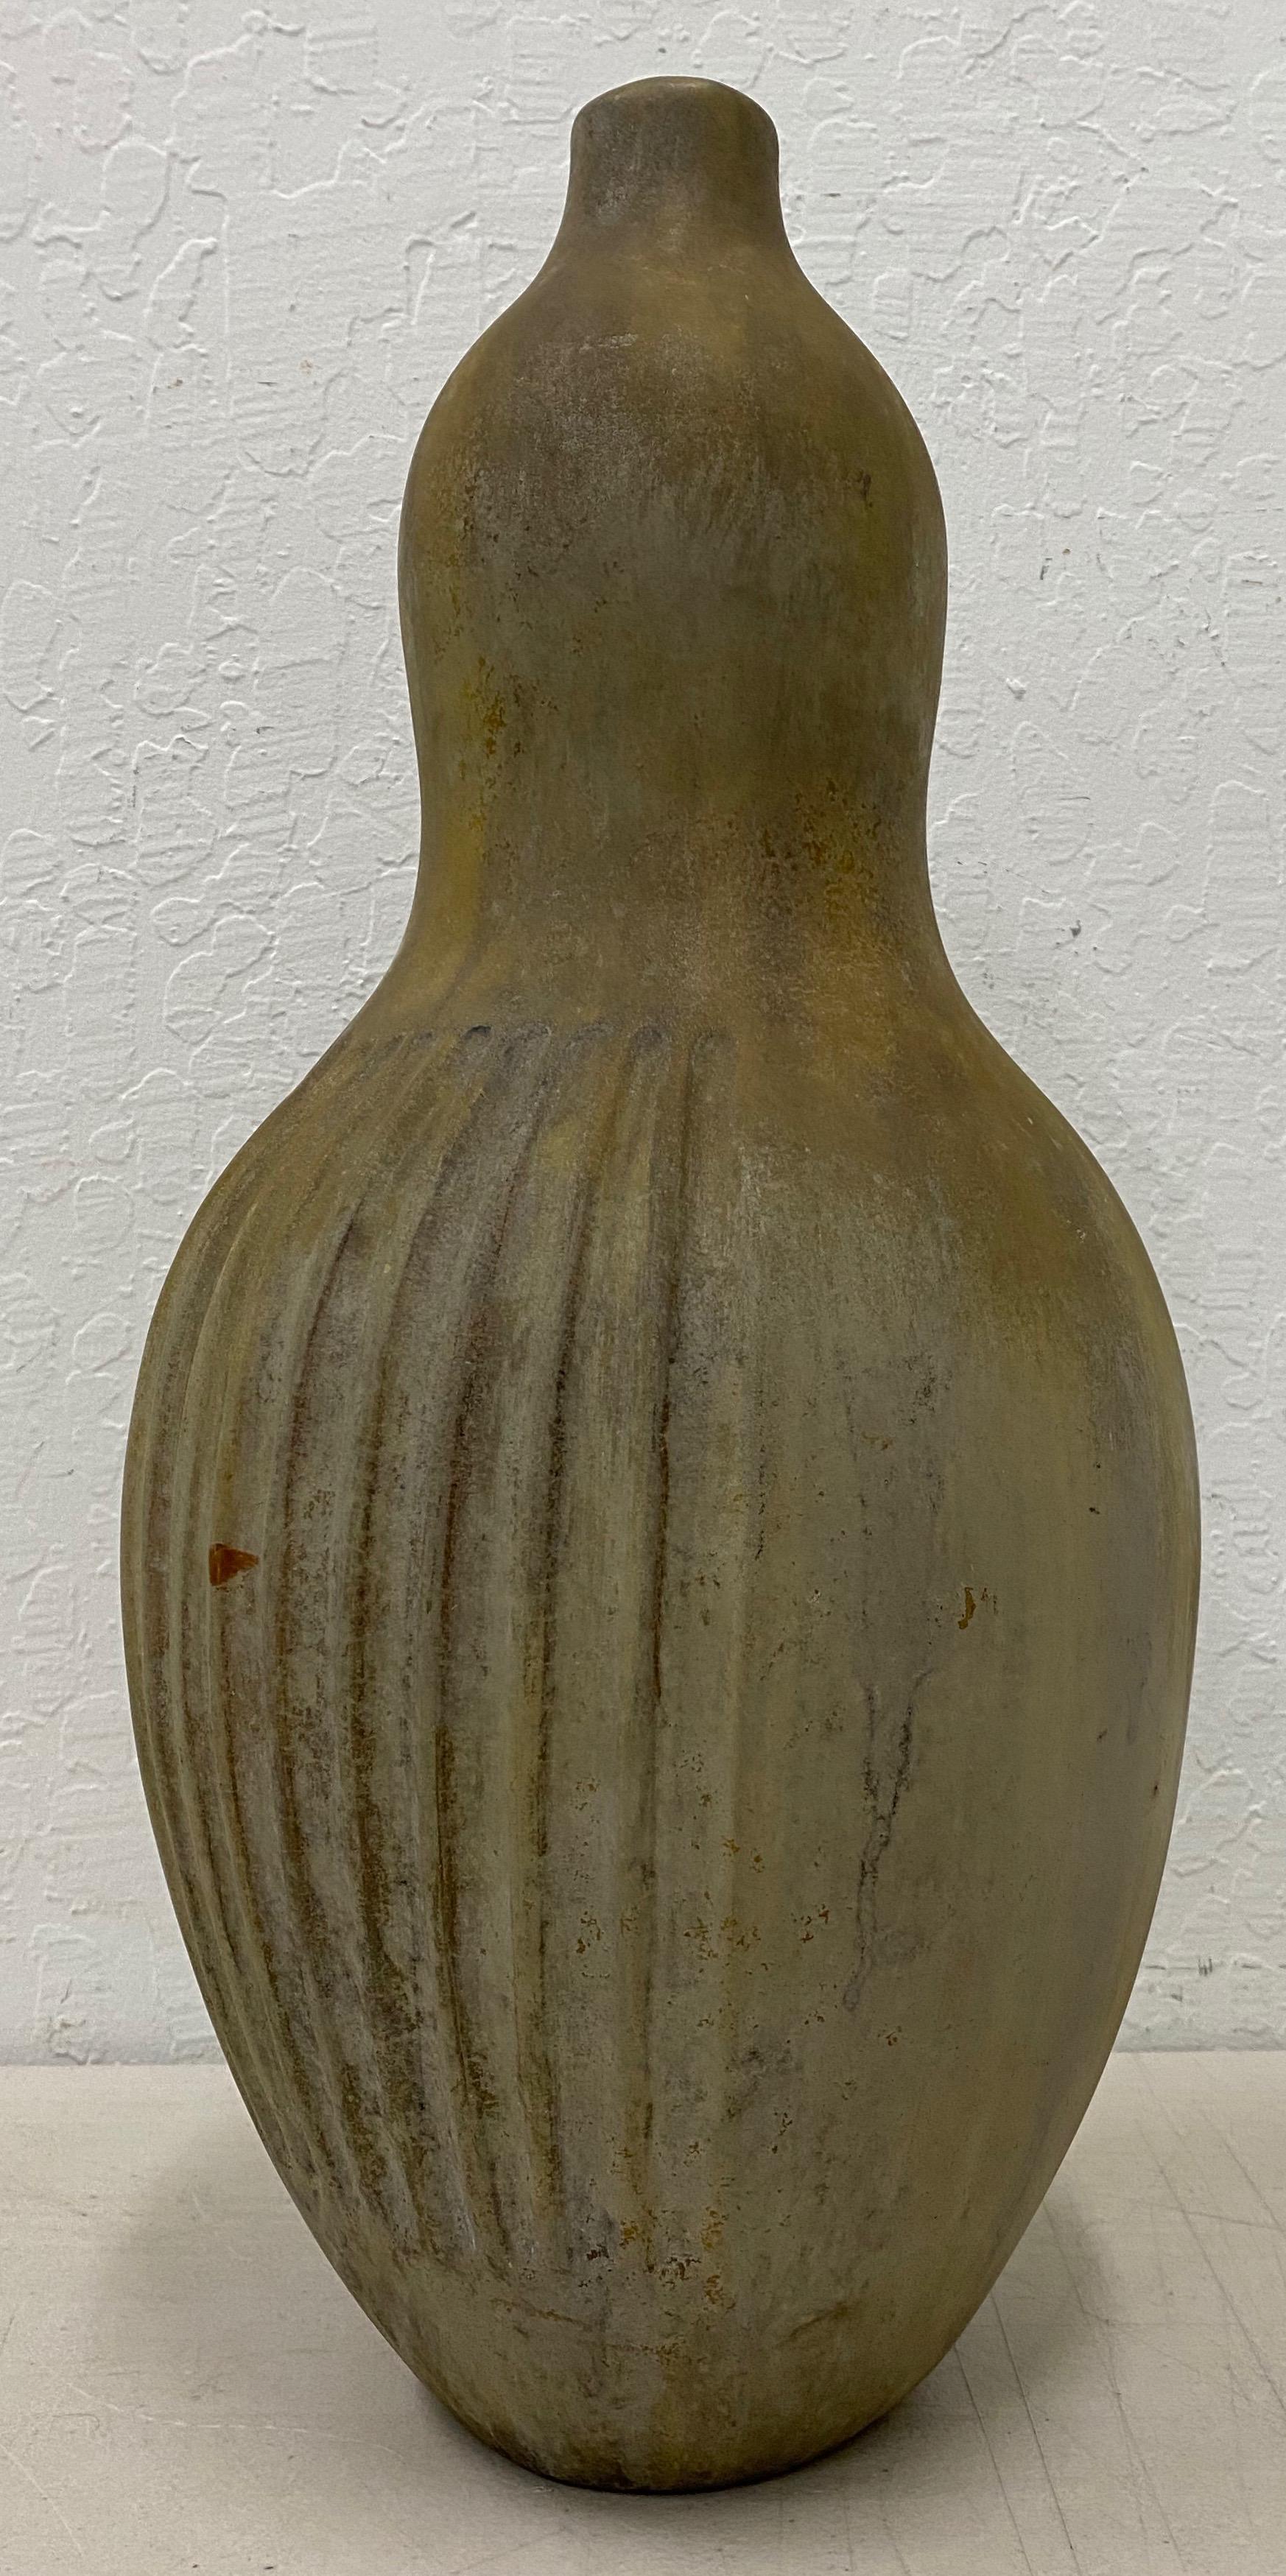 Marcello Fantoni (Italy, 1915-2011) Mid-Century Modern bulbous vase

Dimensions 4